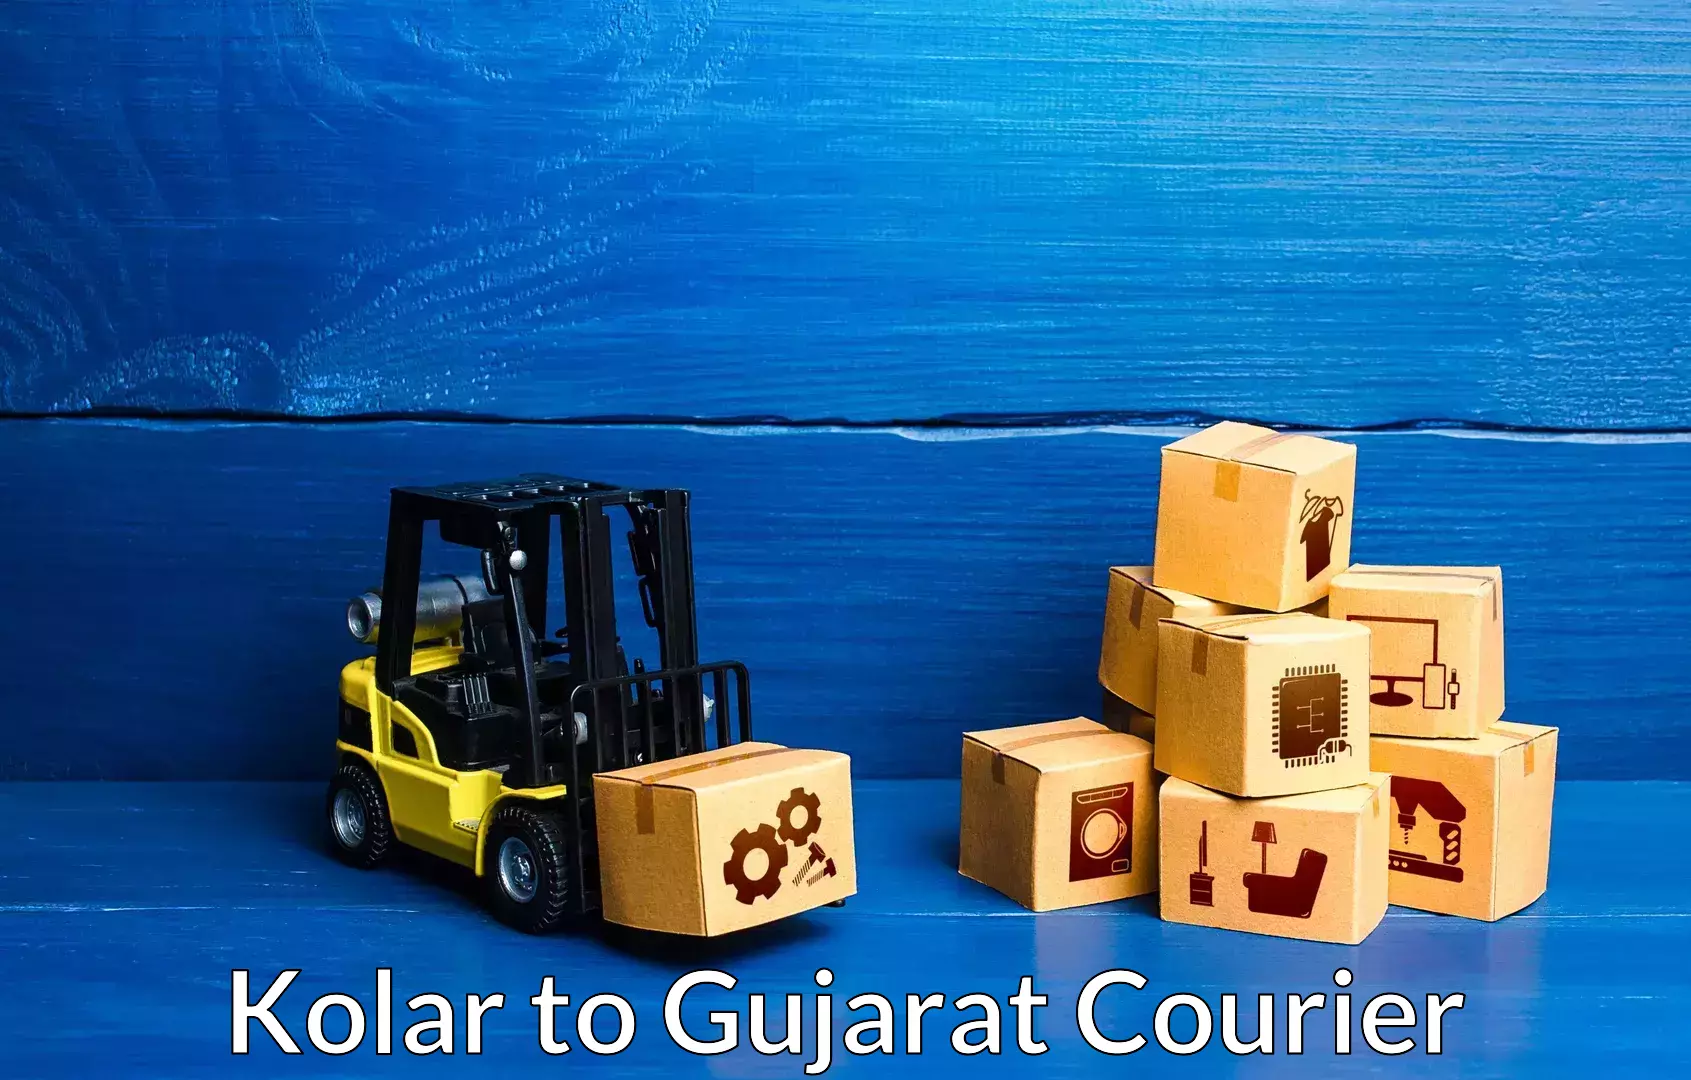 Trusted relocation experts Kolar to Gujarat